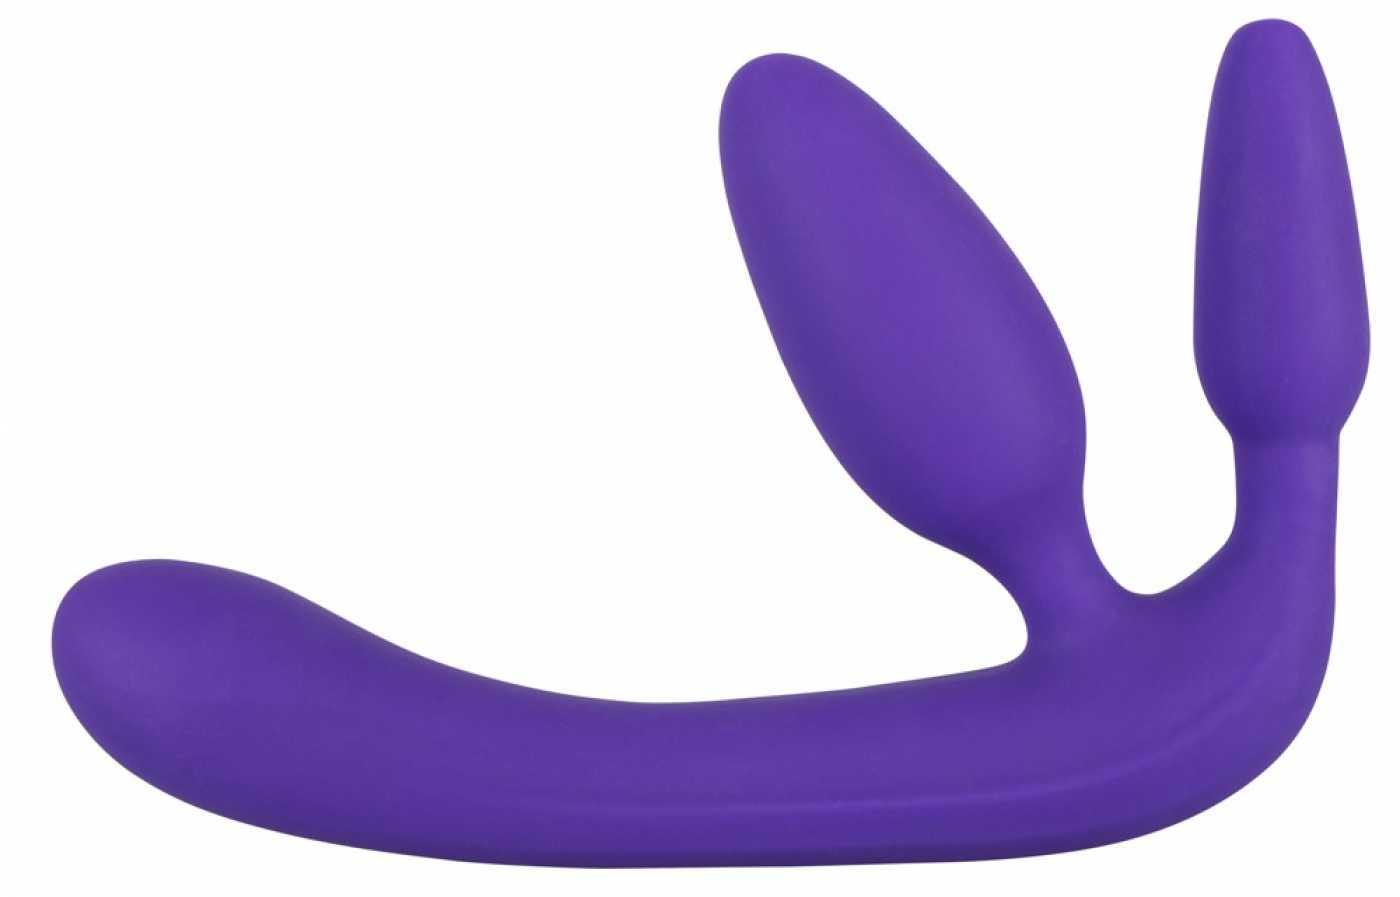 Triple Teaser Strapless Strap-on — фиолетовый безремневой страпон с двумя пробками